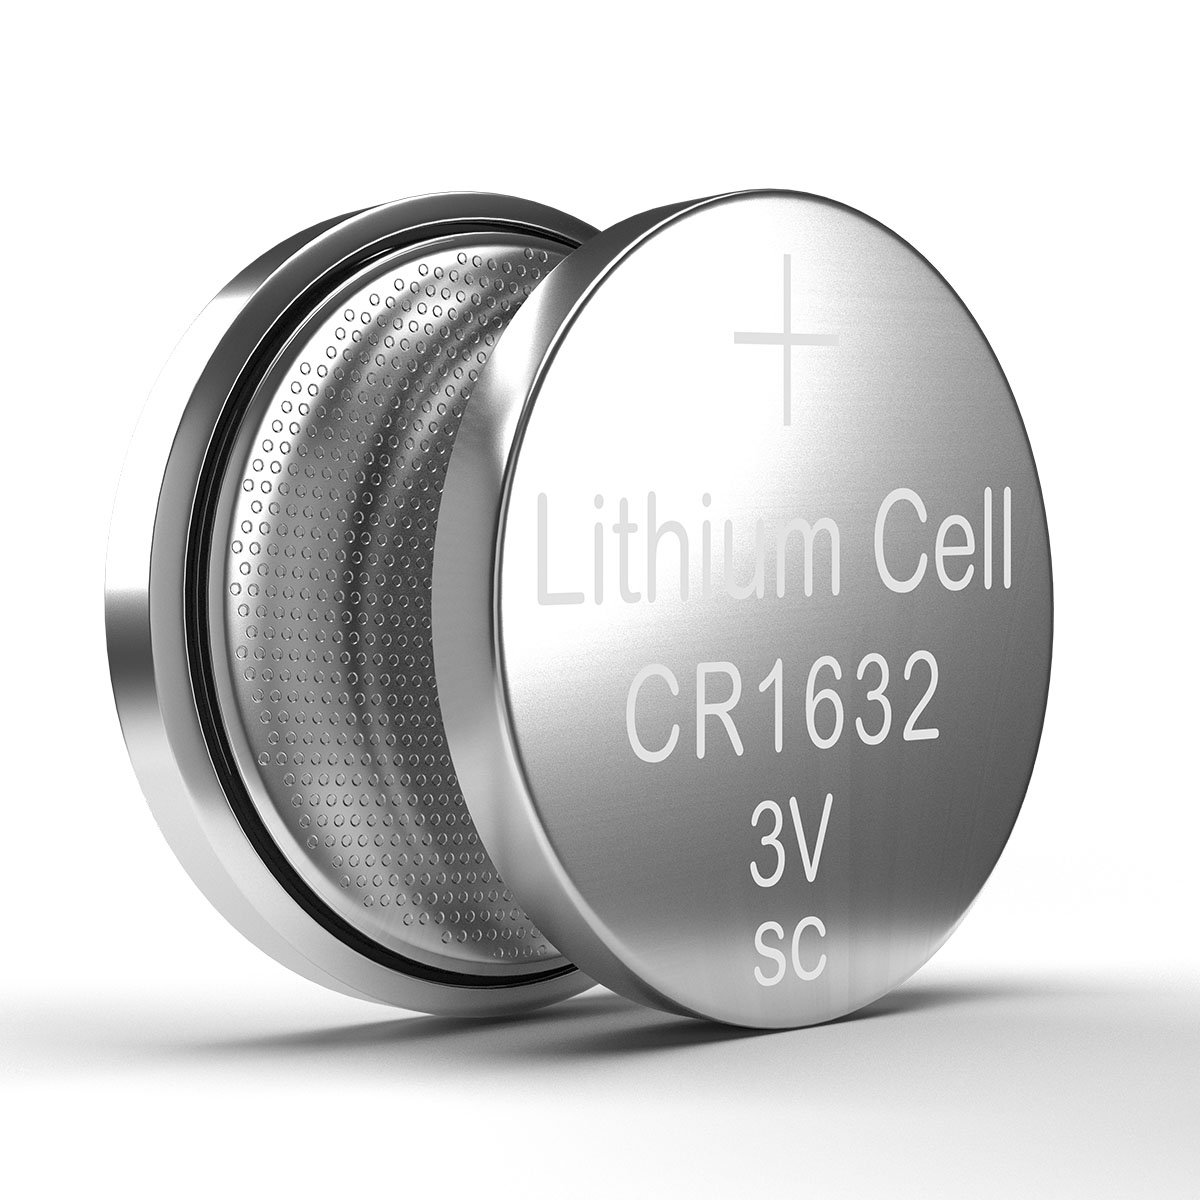 CR1632, CR1632 Battery, Coin Cell Battery